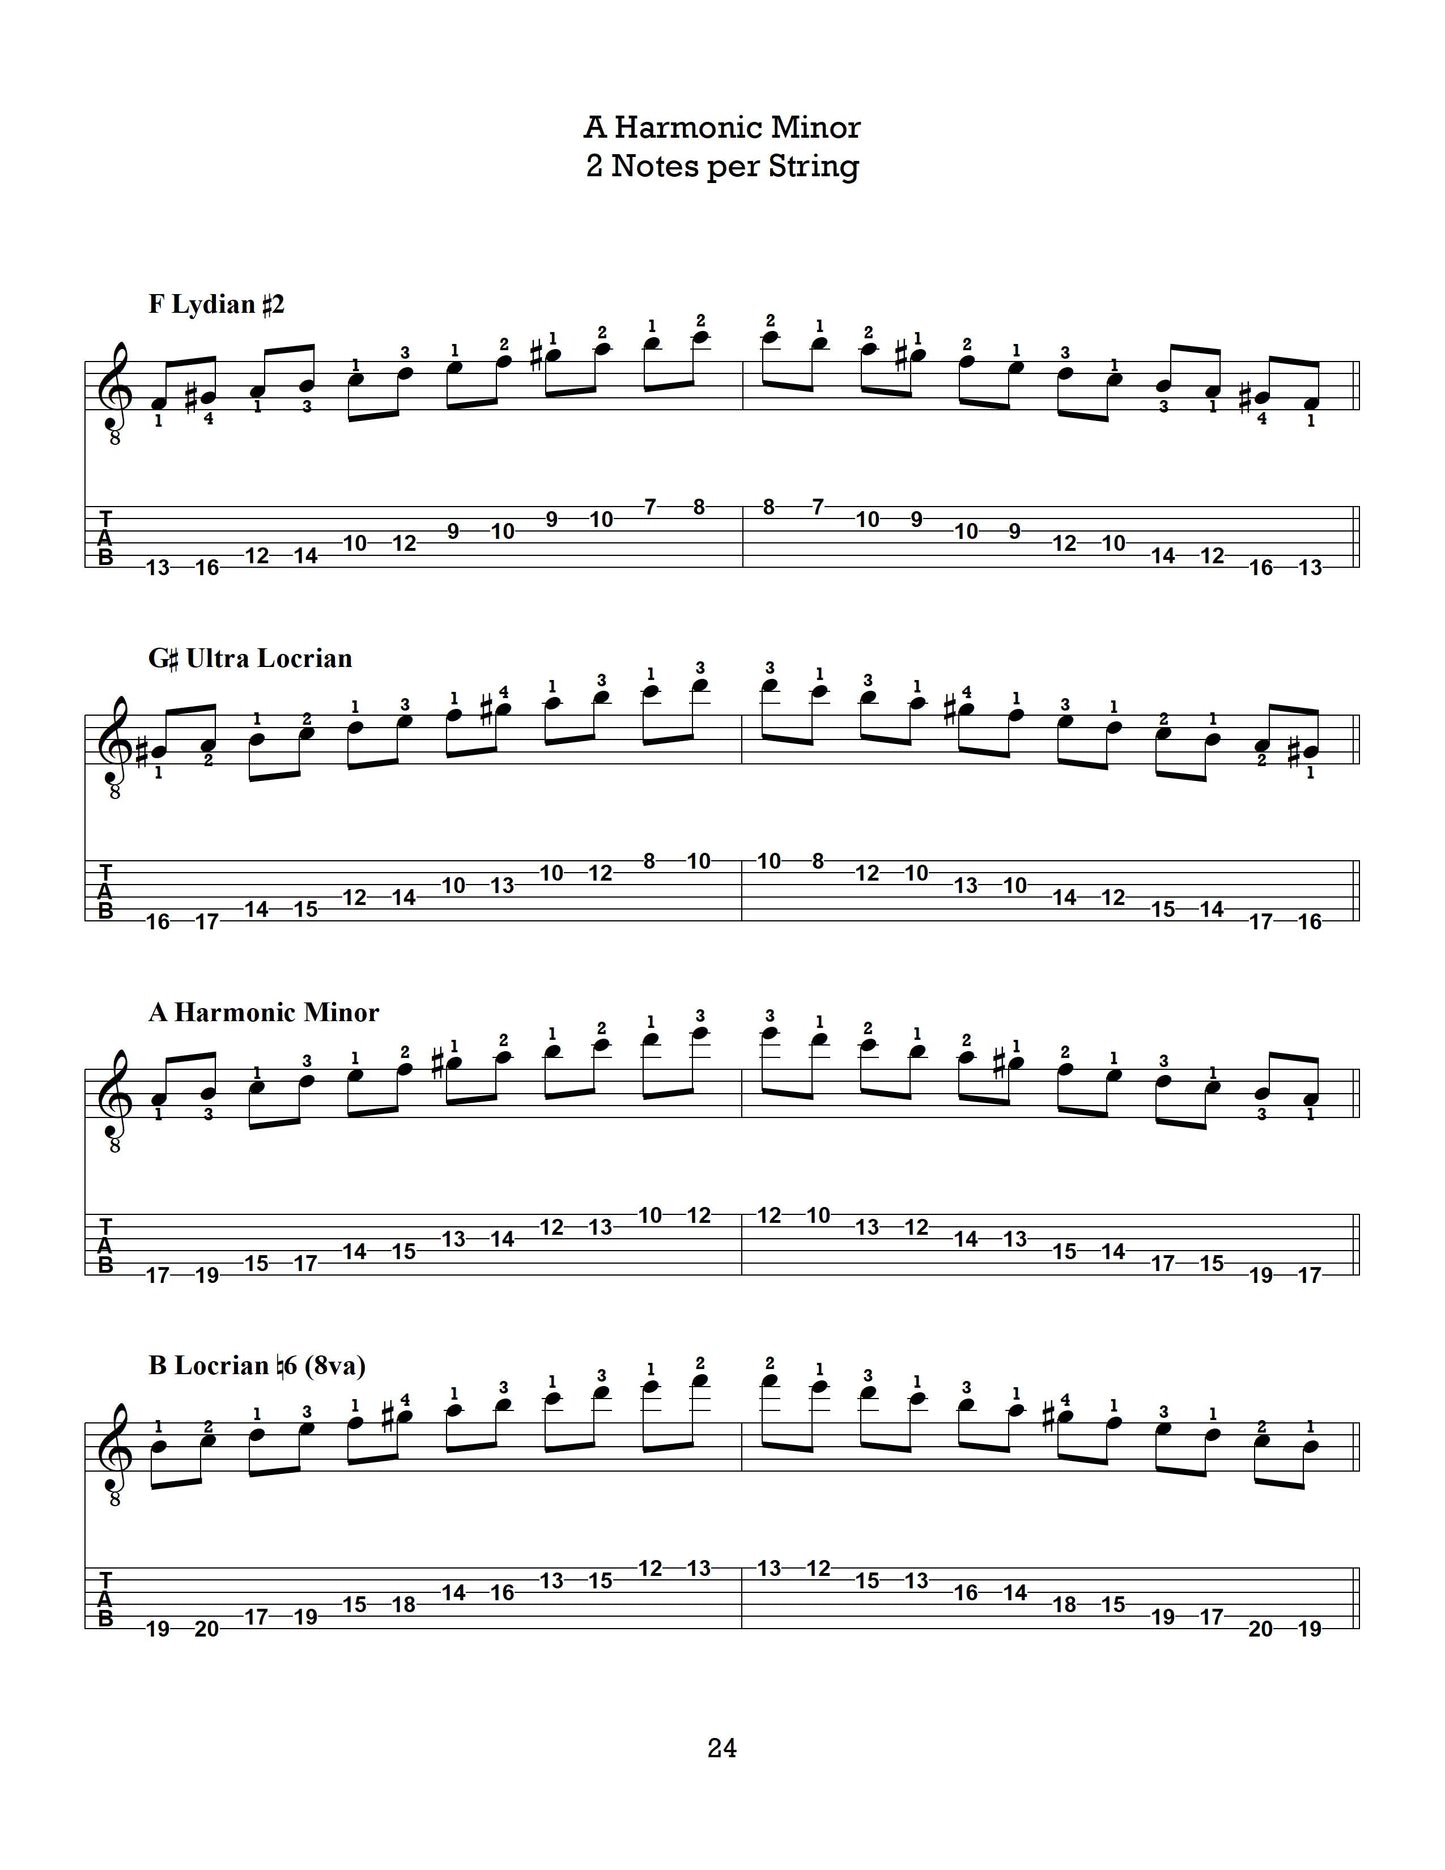 The Left-Hand Gauntlet, Volume 2: Harmonic Minor Scales